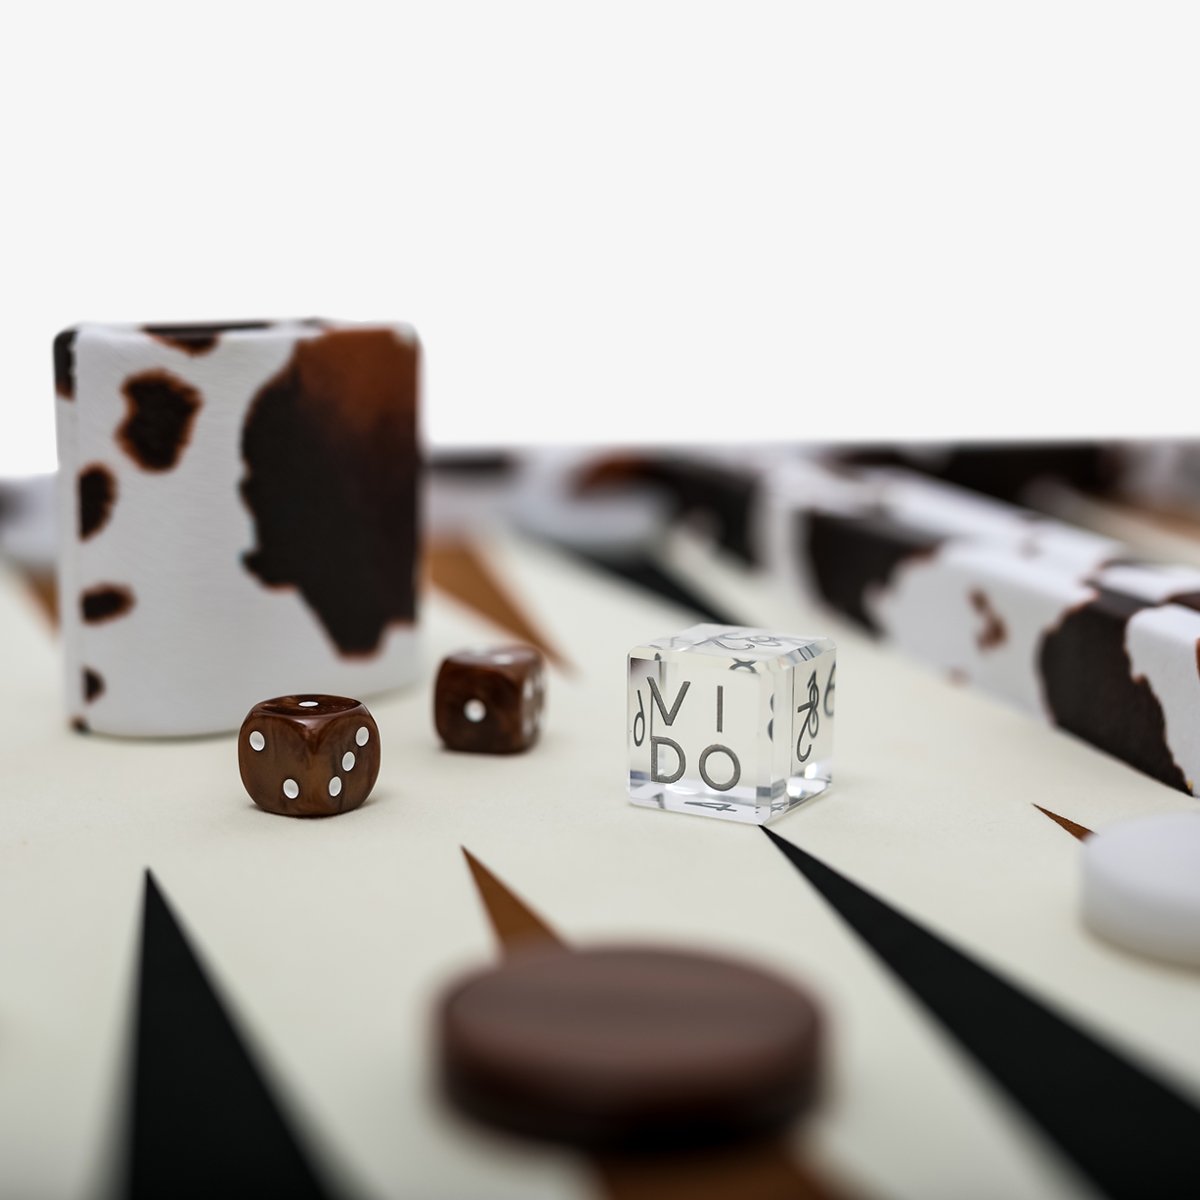 Cow Hide Large Backgammon - VIDO USA